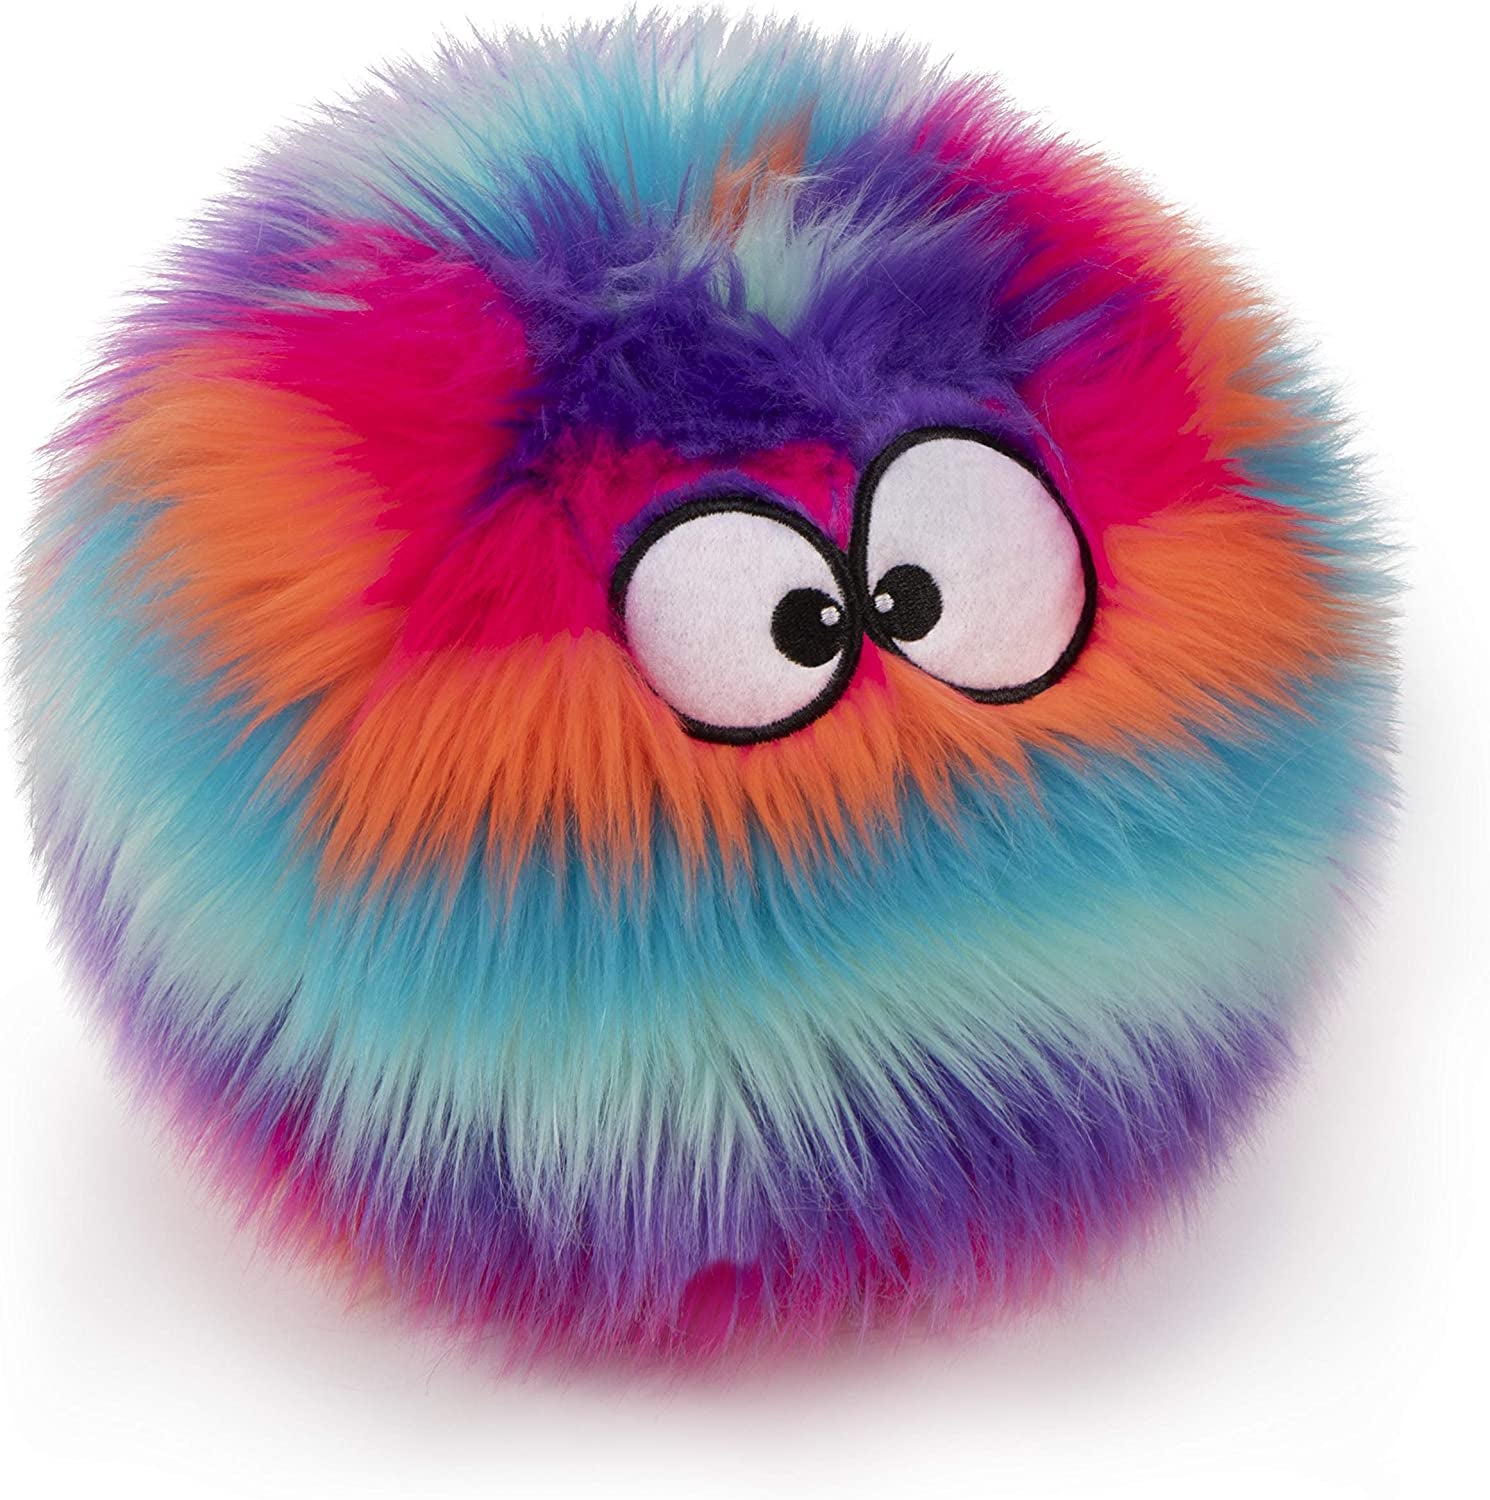 Furballz Squeaky Plush Ball Dog Toy, Chew Guard Technology - Rainbow, Large